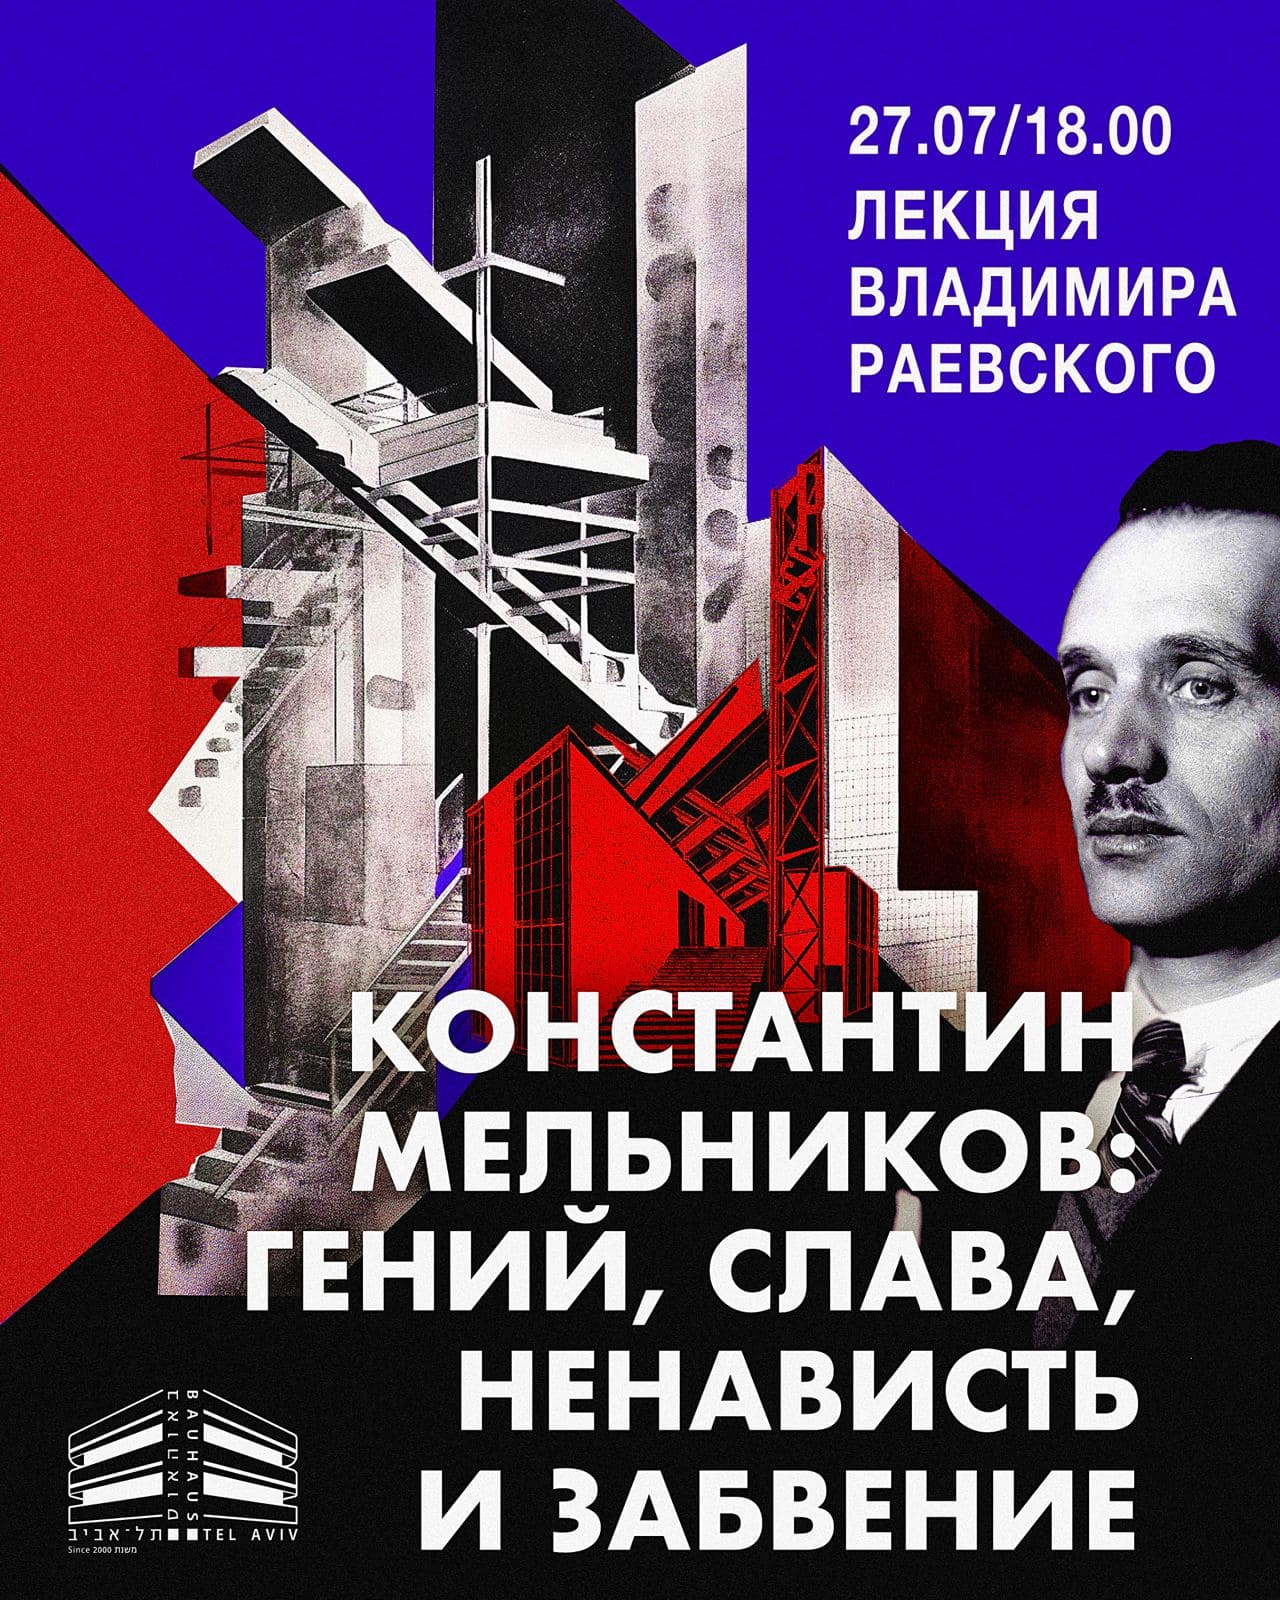 Konstantin Melnikov: Genius, Fame, Hatred and Oblivion